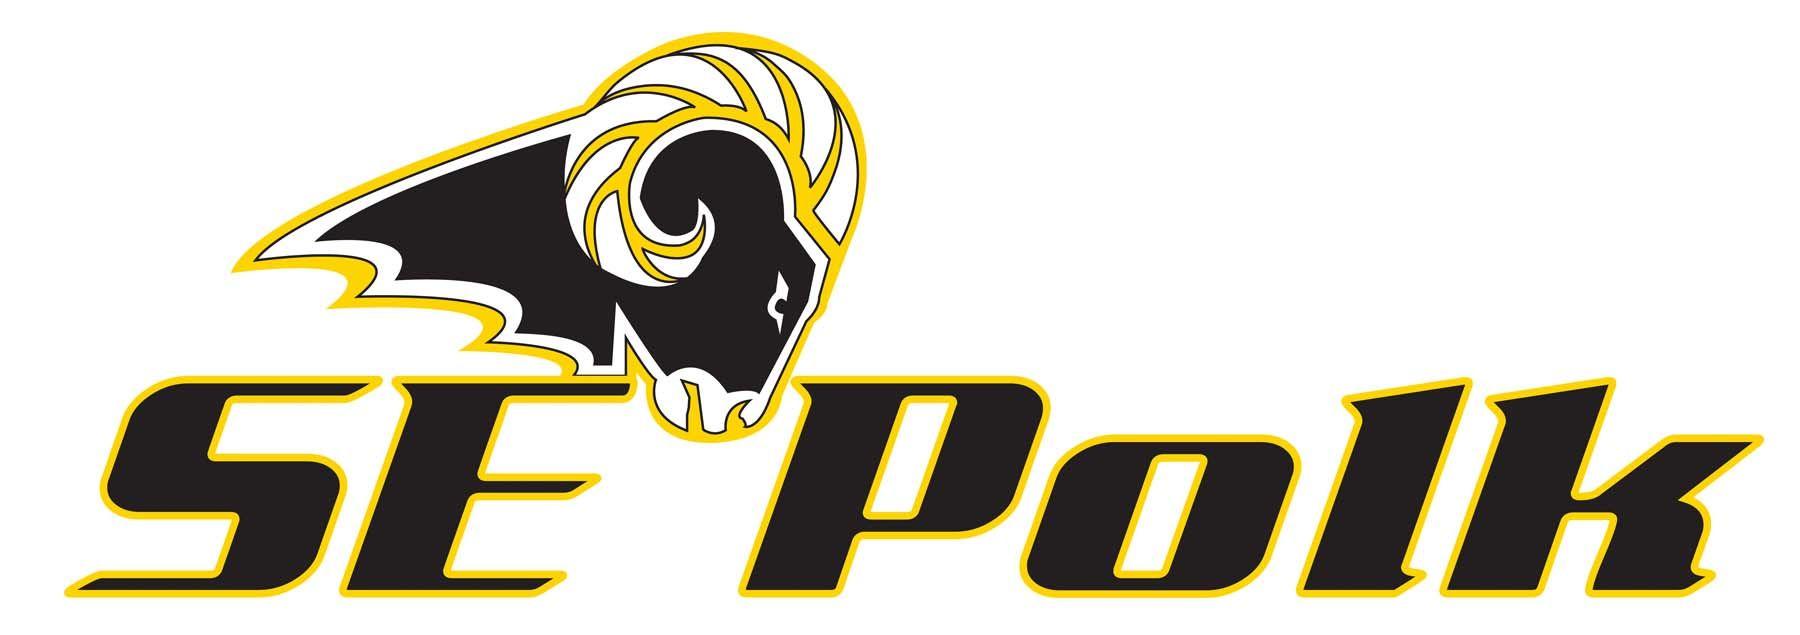 Polk Logo - Logo Library - Southeast Polk Community School District